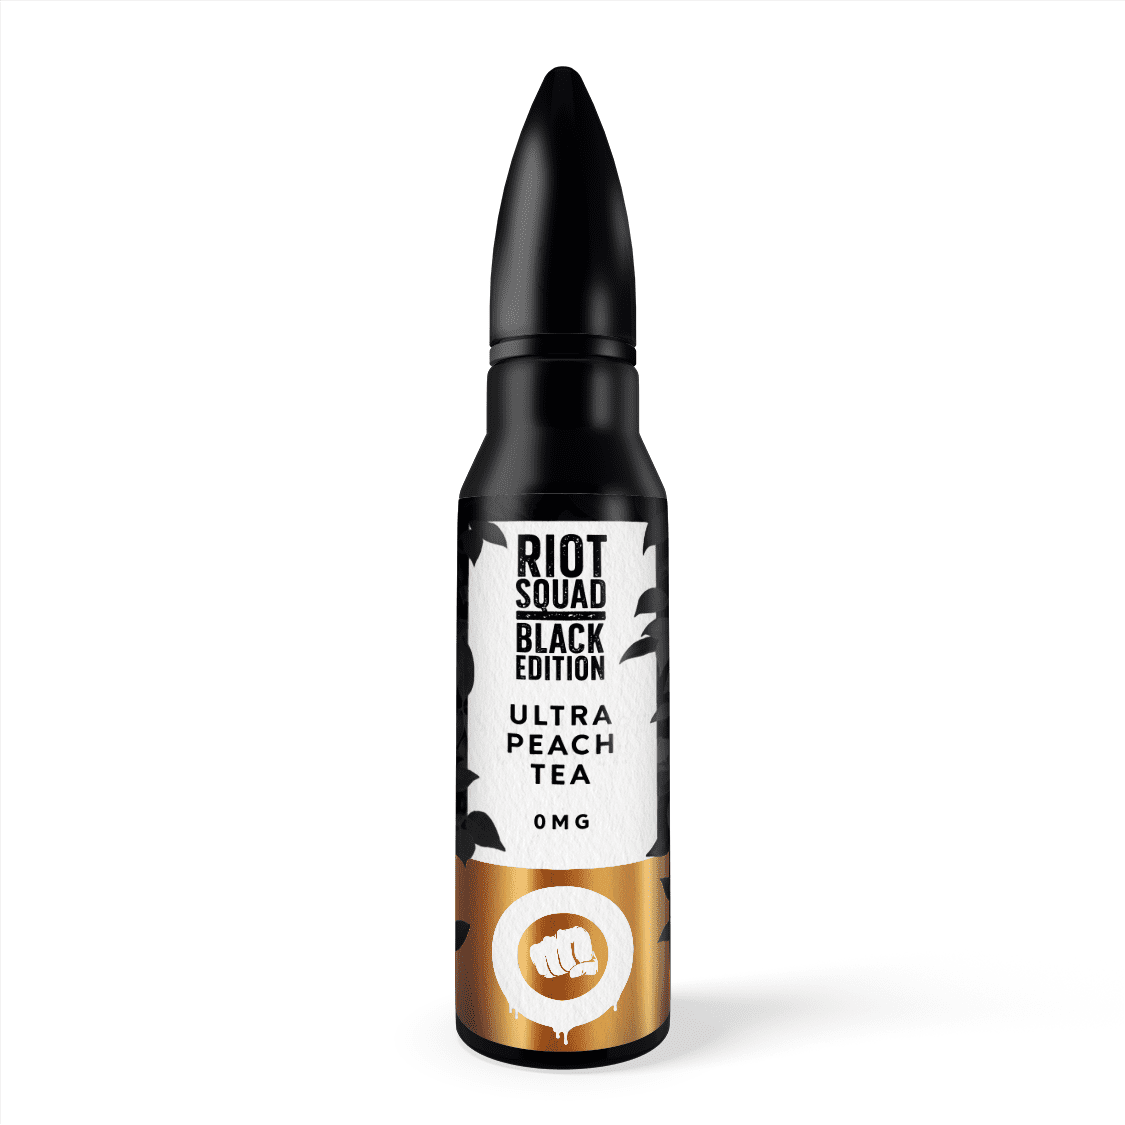  Riot Squad Black Edition - Ultra Peach Tea - 50ml 